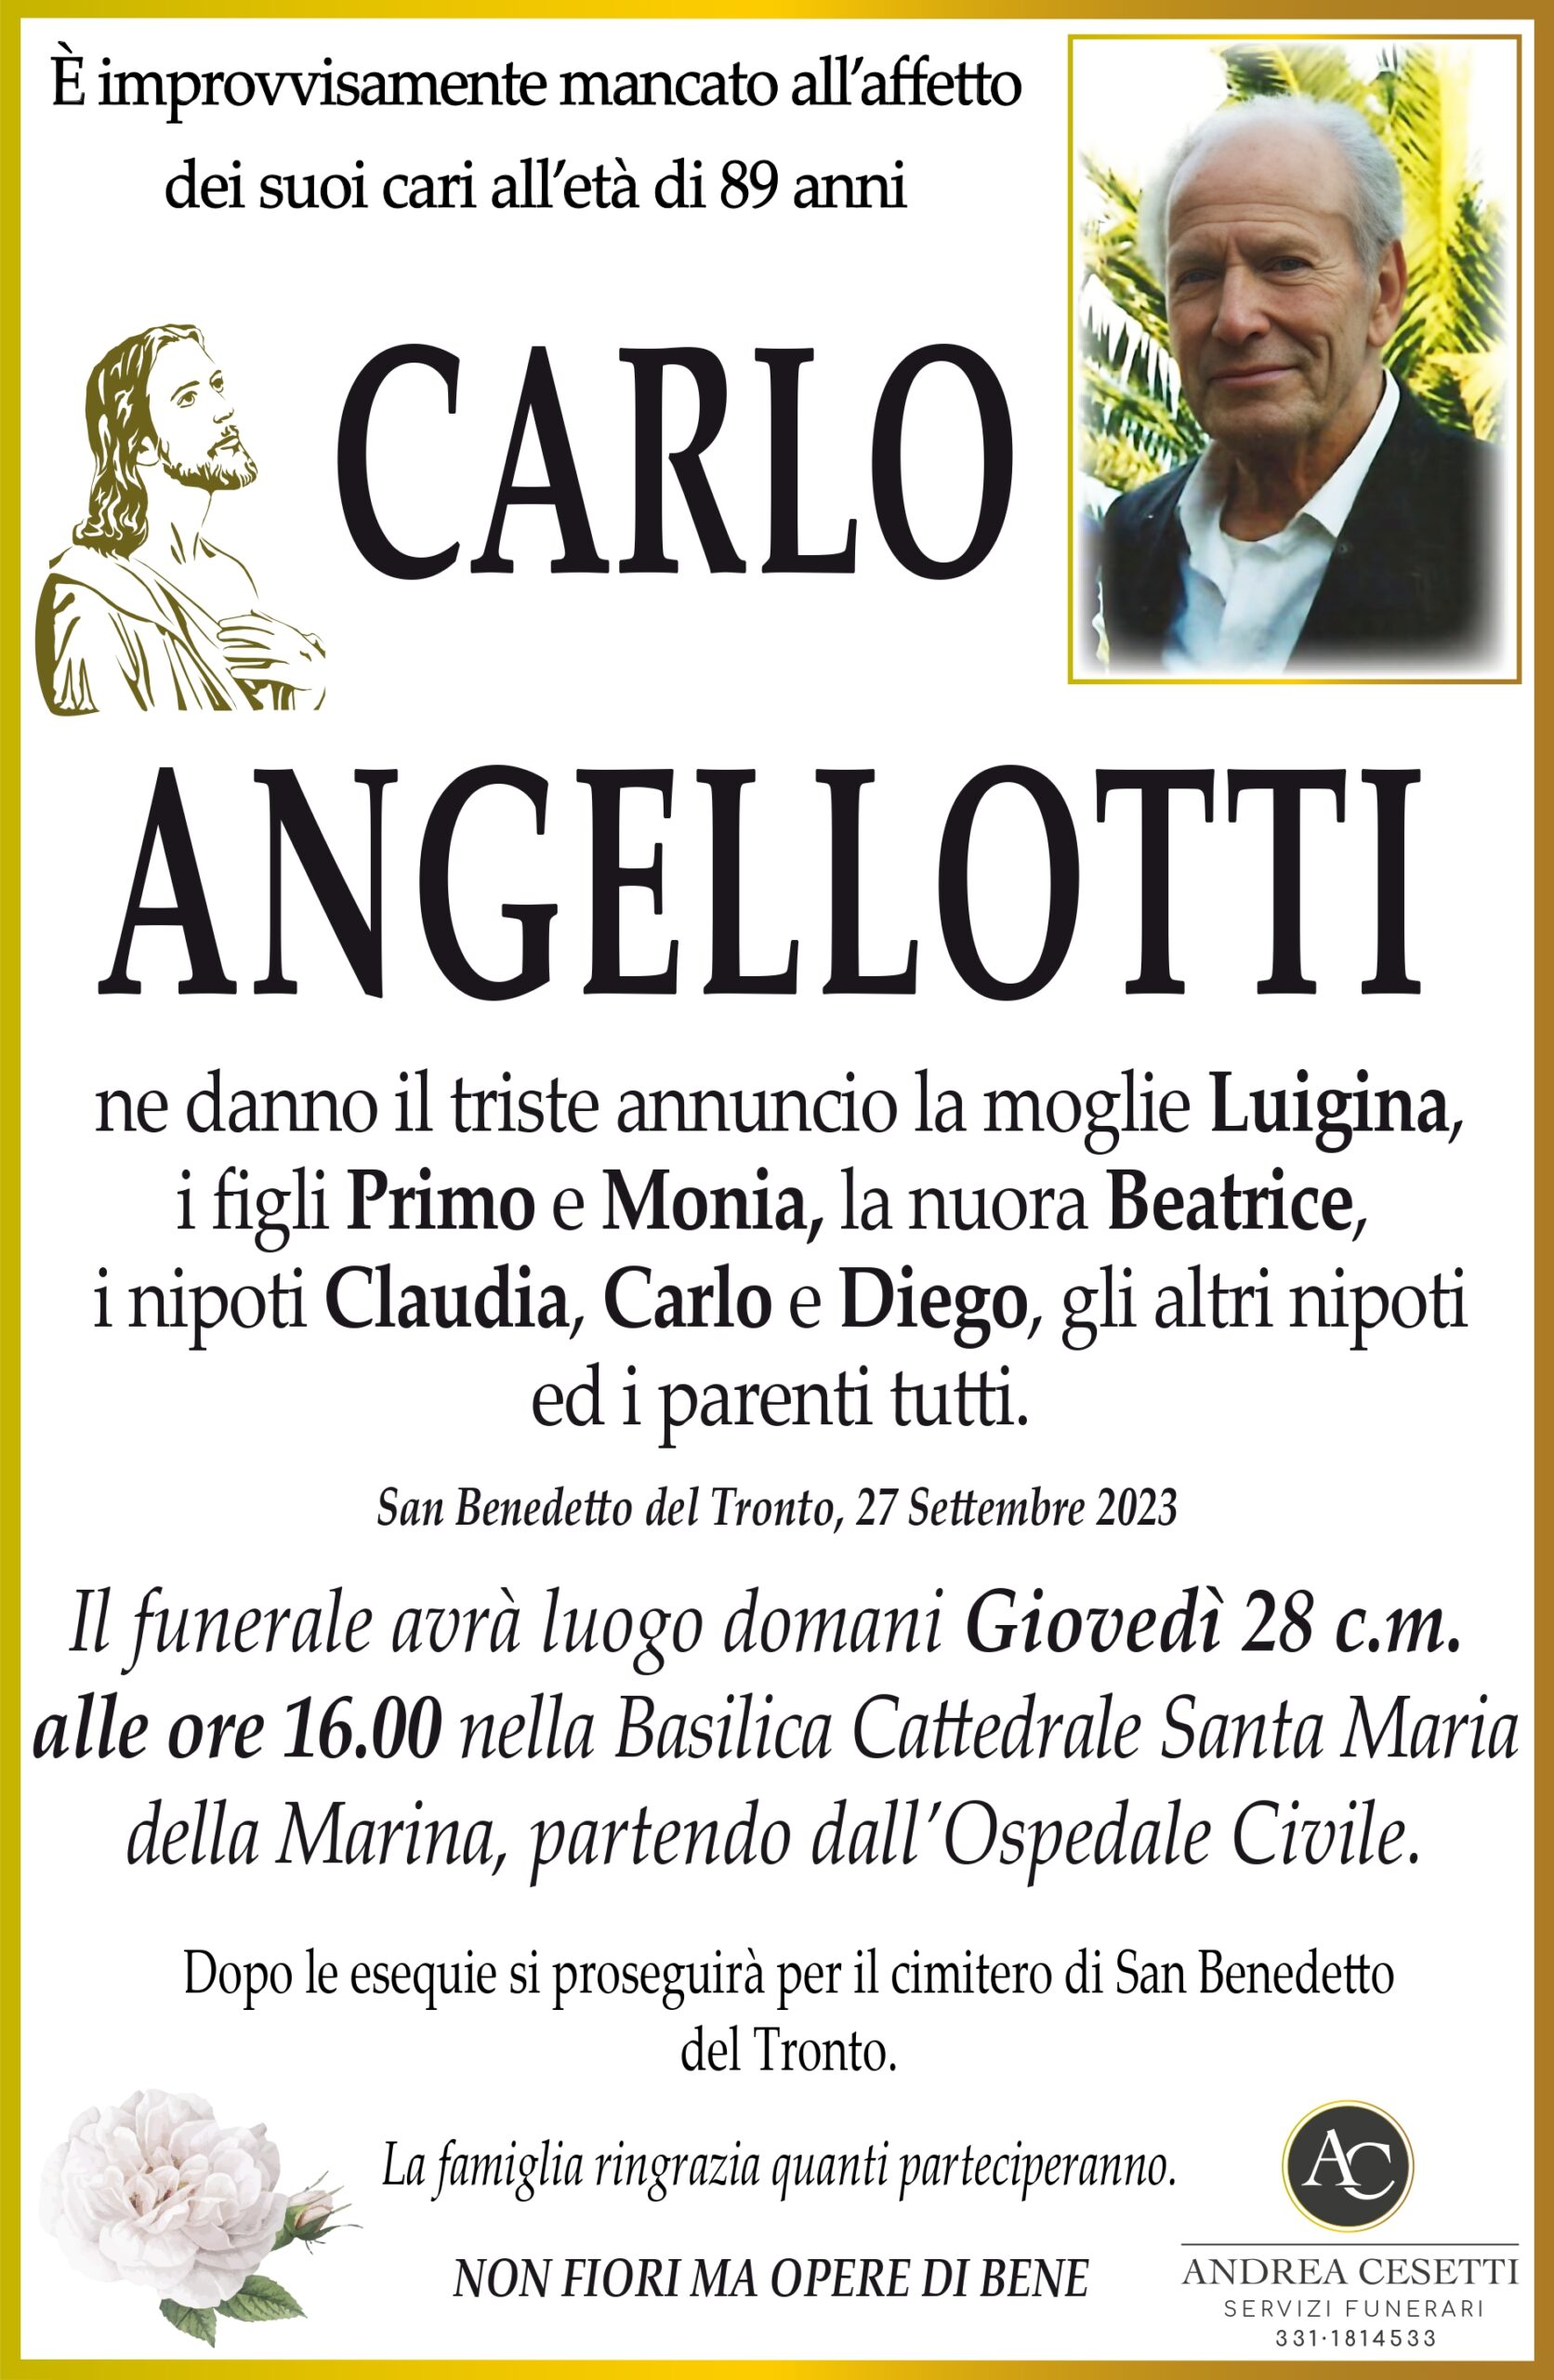 Carlo Angellotti